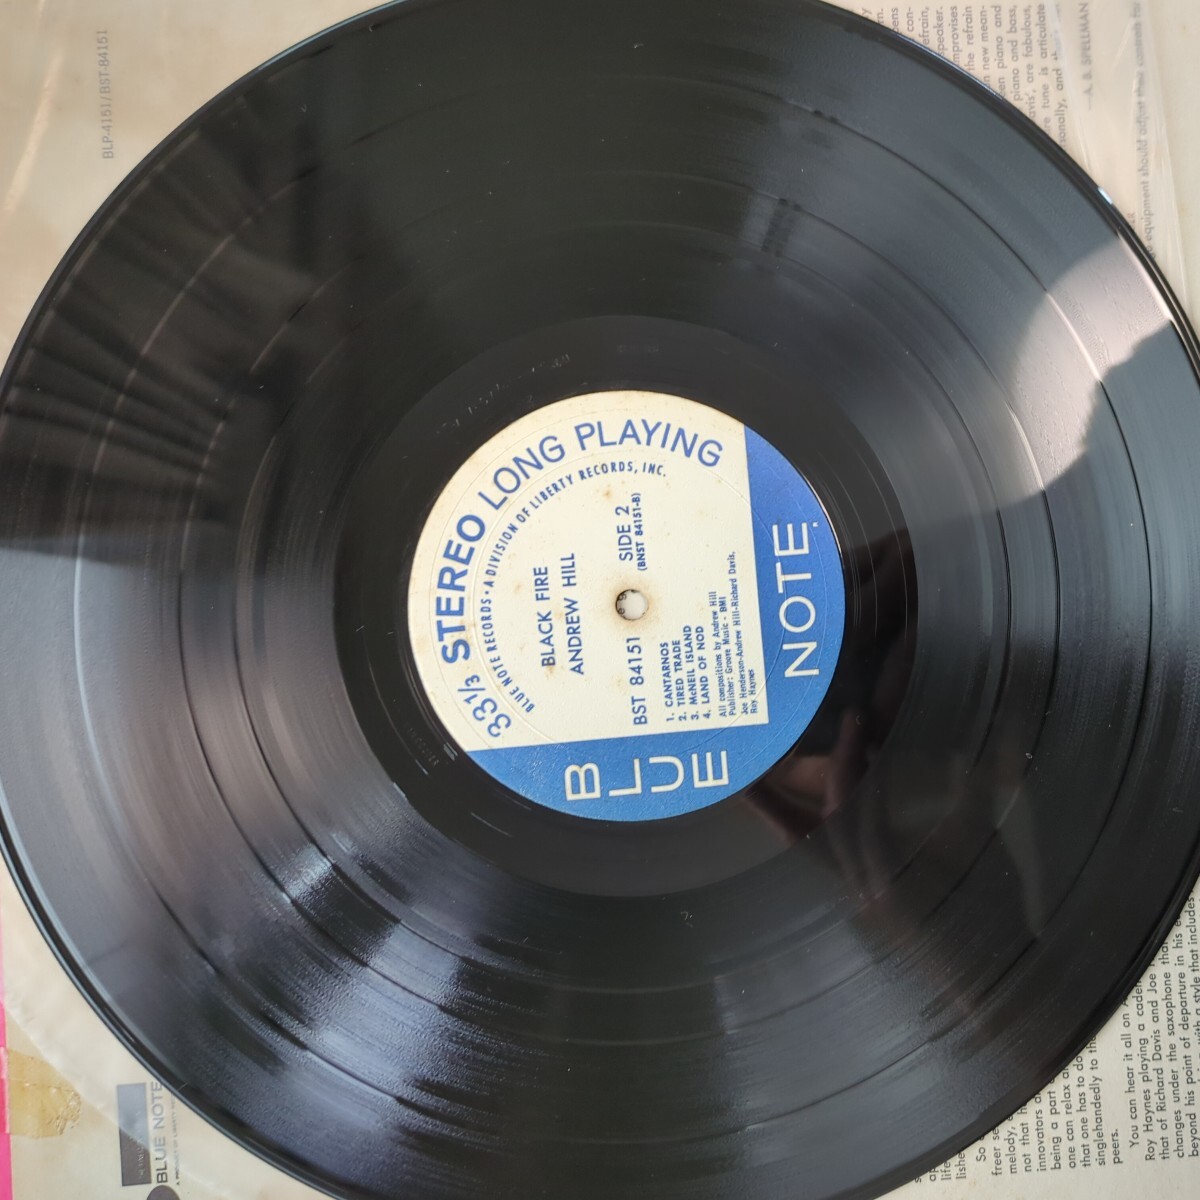 US van gelder RVG a ANDREW HILL BLACK FIRE joe henderson richard davis record レコード LP アナログ vinyl bluenote ブルーノート_画像8